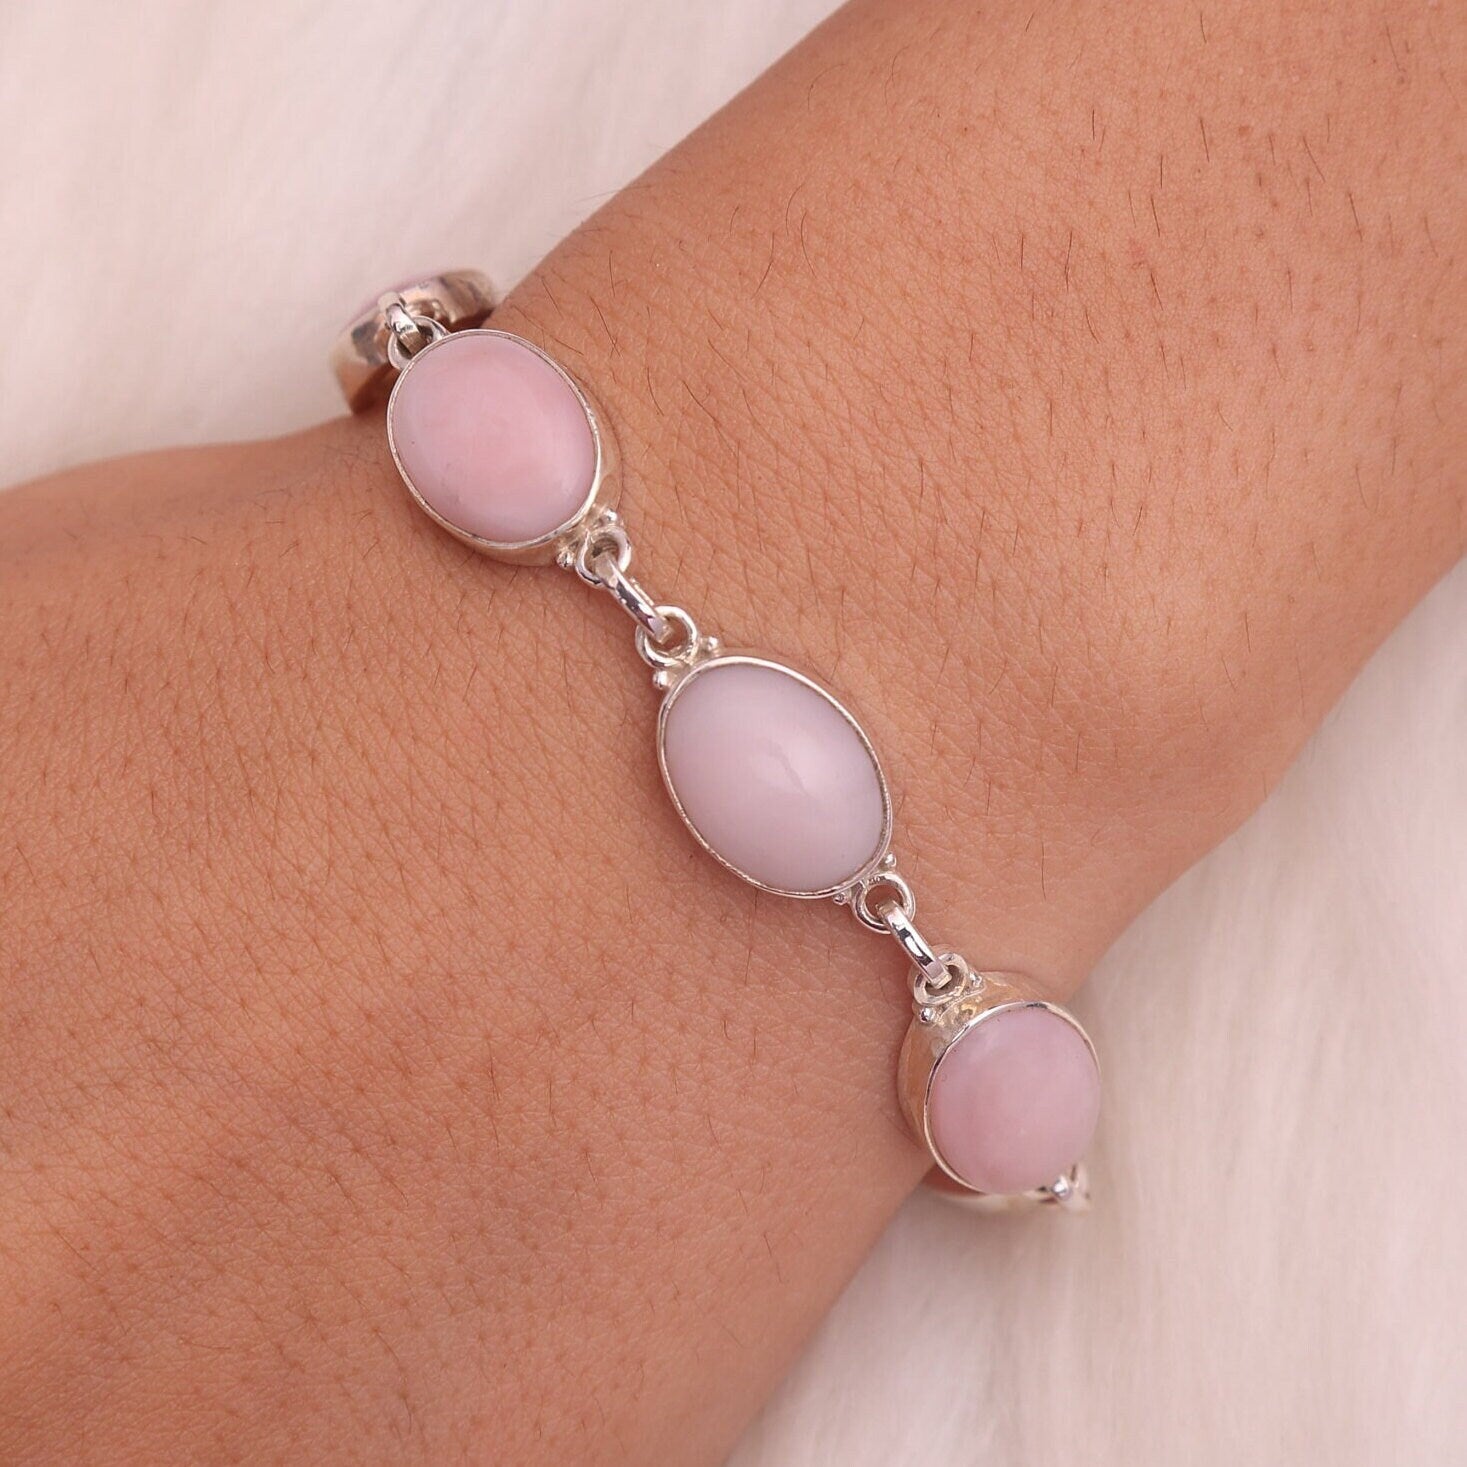 Pink Opal Bracelet, 925 Sterling Silver Bracelet, October Birthstone Bracelet, Handmade Jewelry, Gemstone Silver Bracelet, Gift for Her